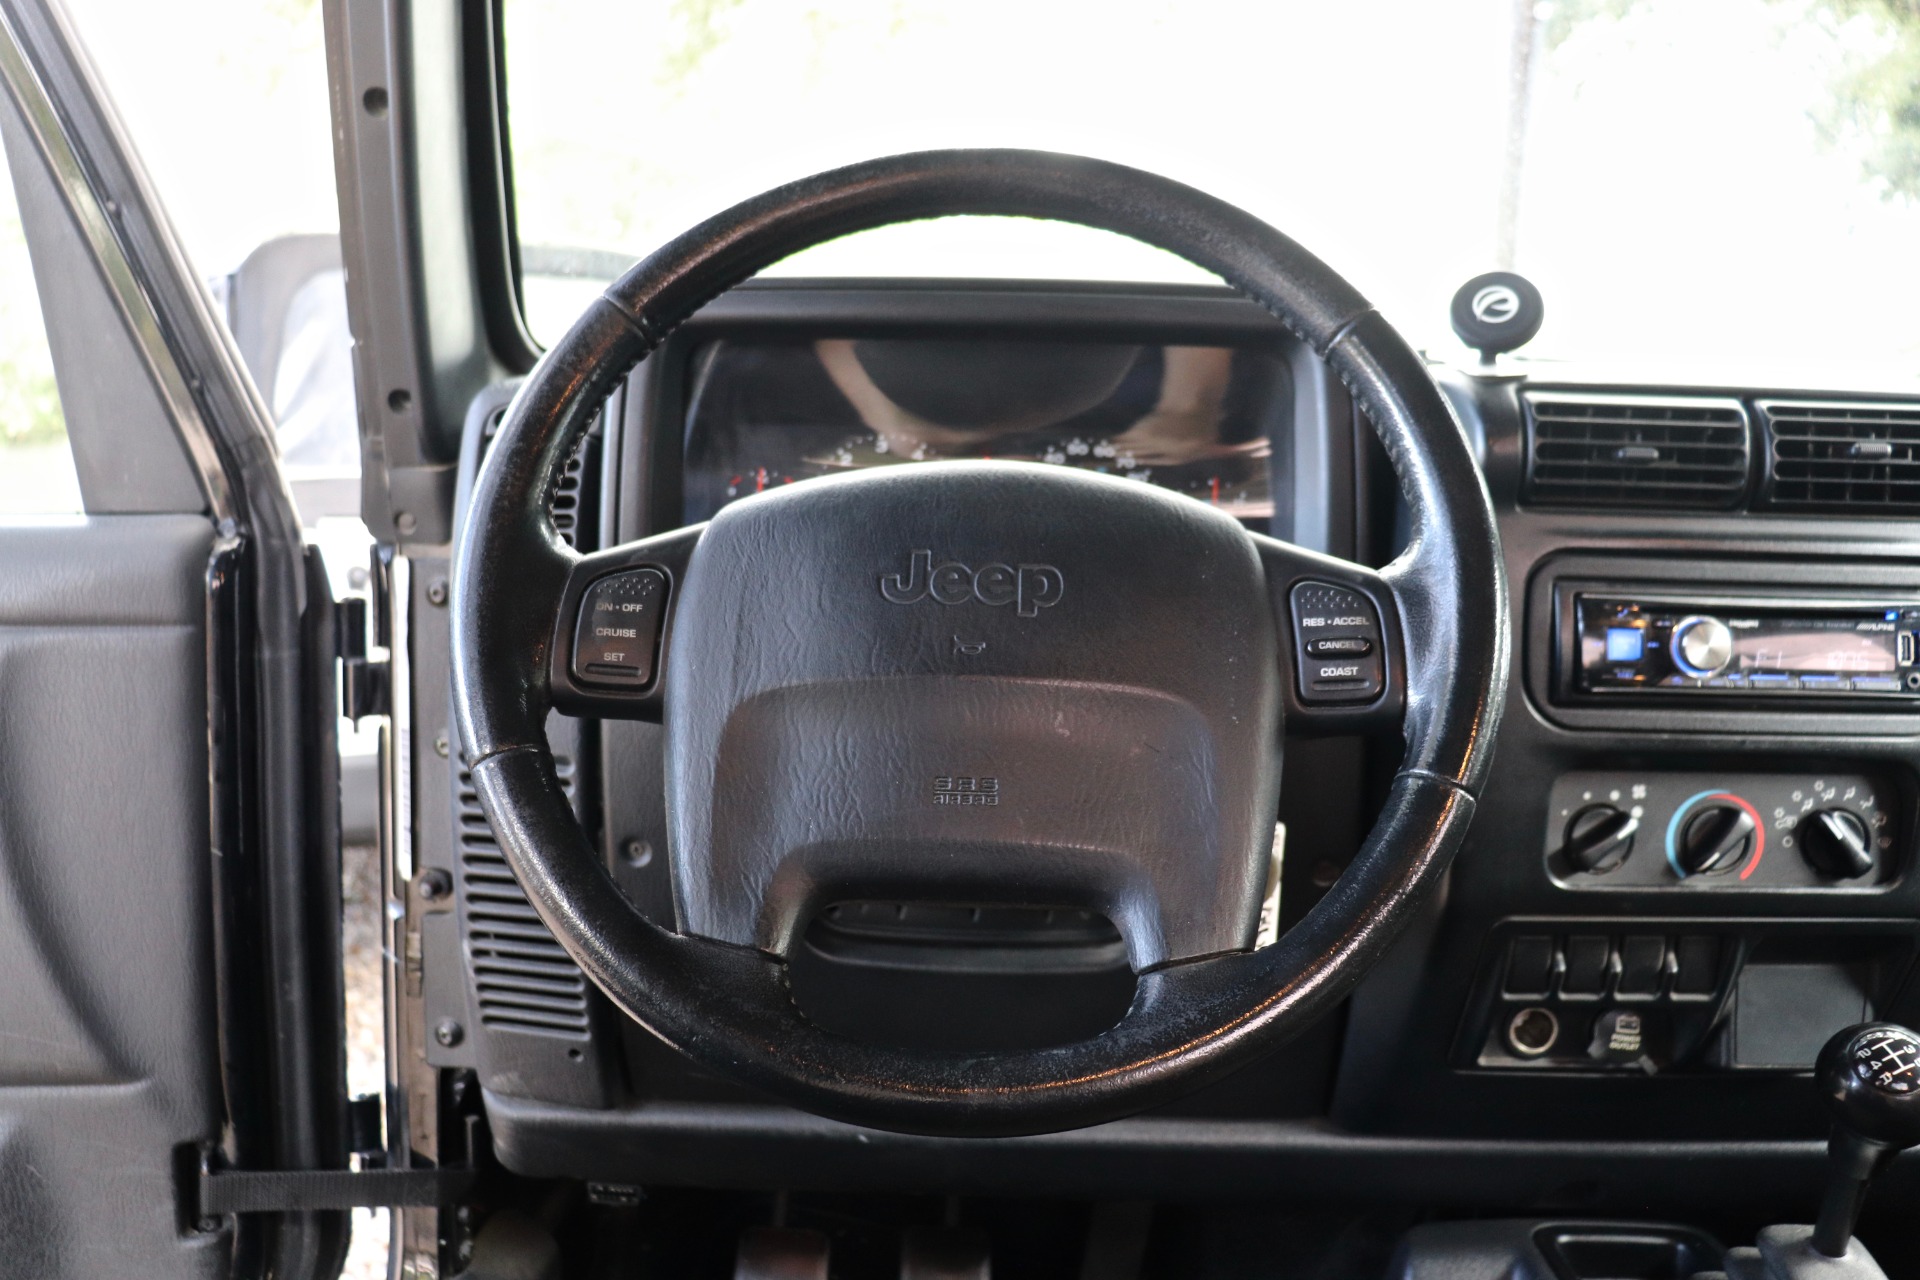 Used-2003-Jeep-Wrangler-X-Freedom-Edition